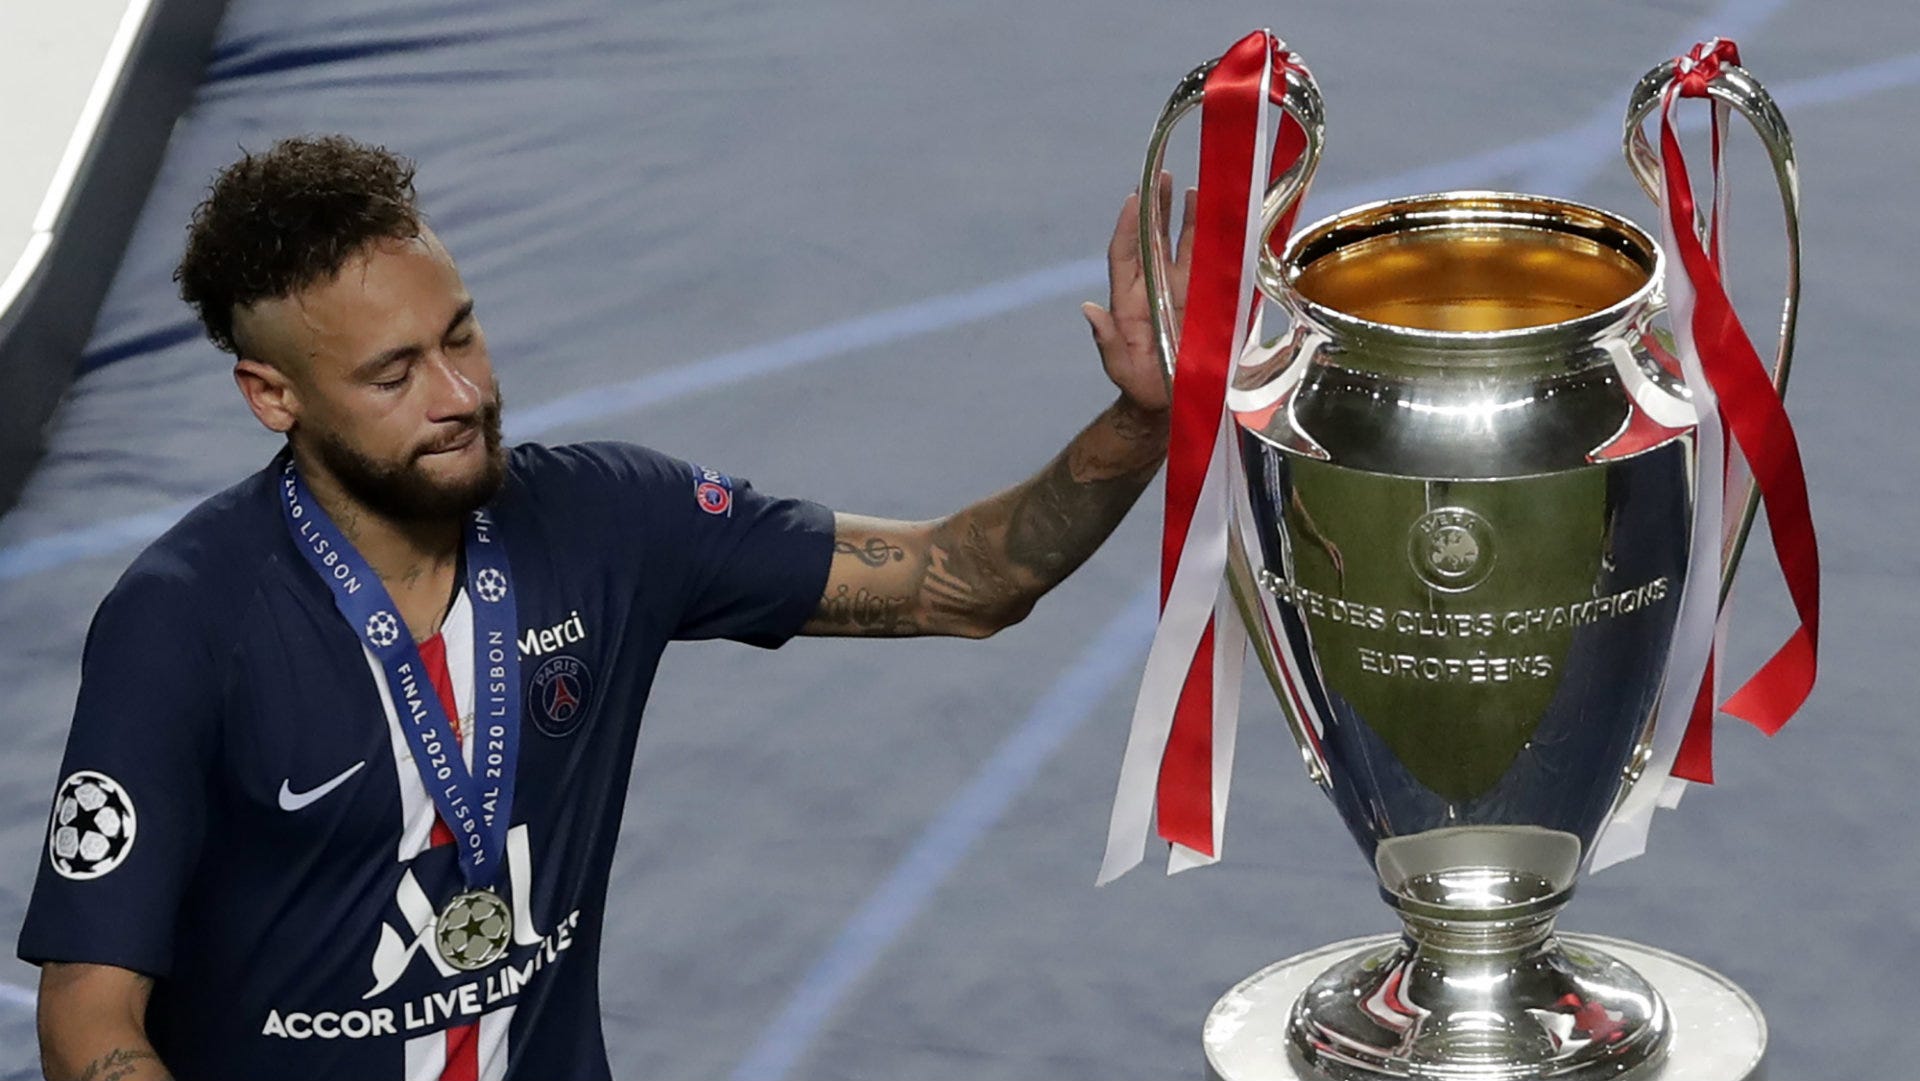 Cheer up, Neymar PSG's European future finally looks bright despite